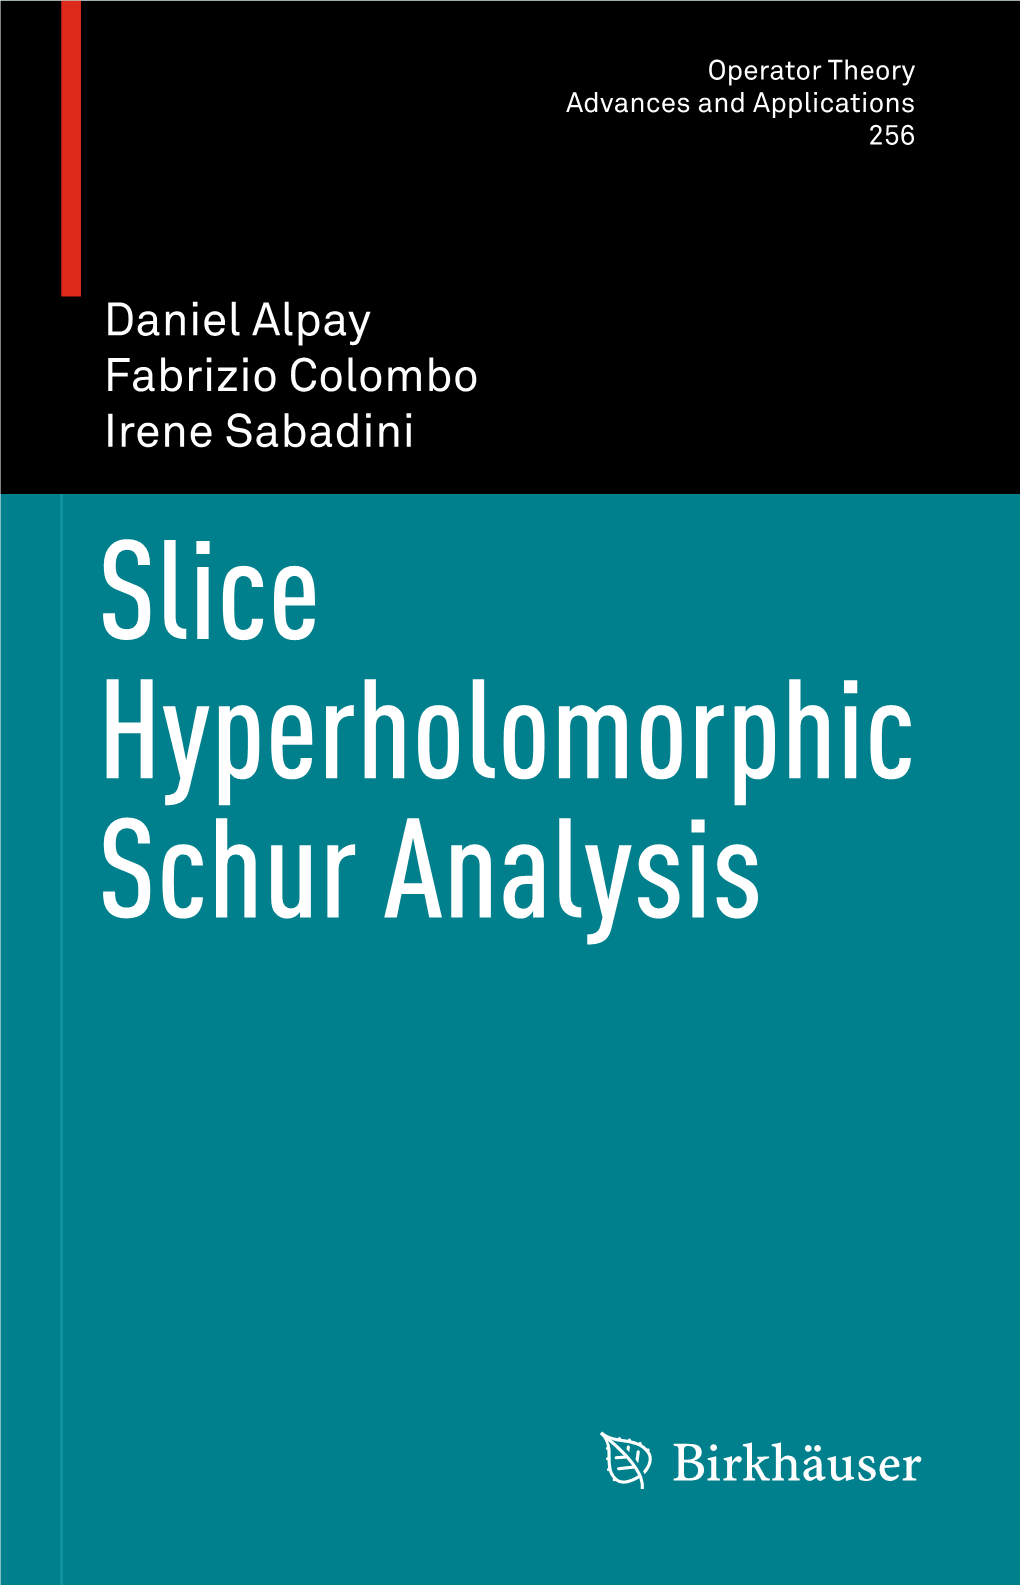 Slice Hyperholomorphic Schur Analysis